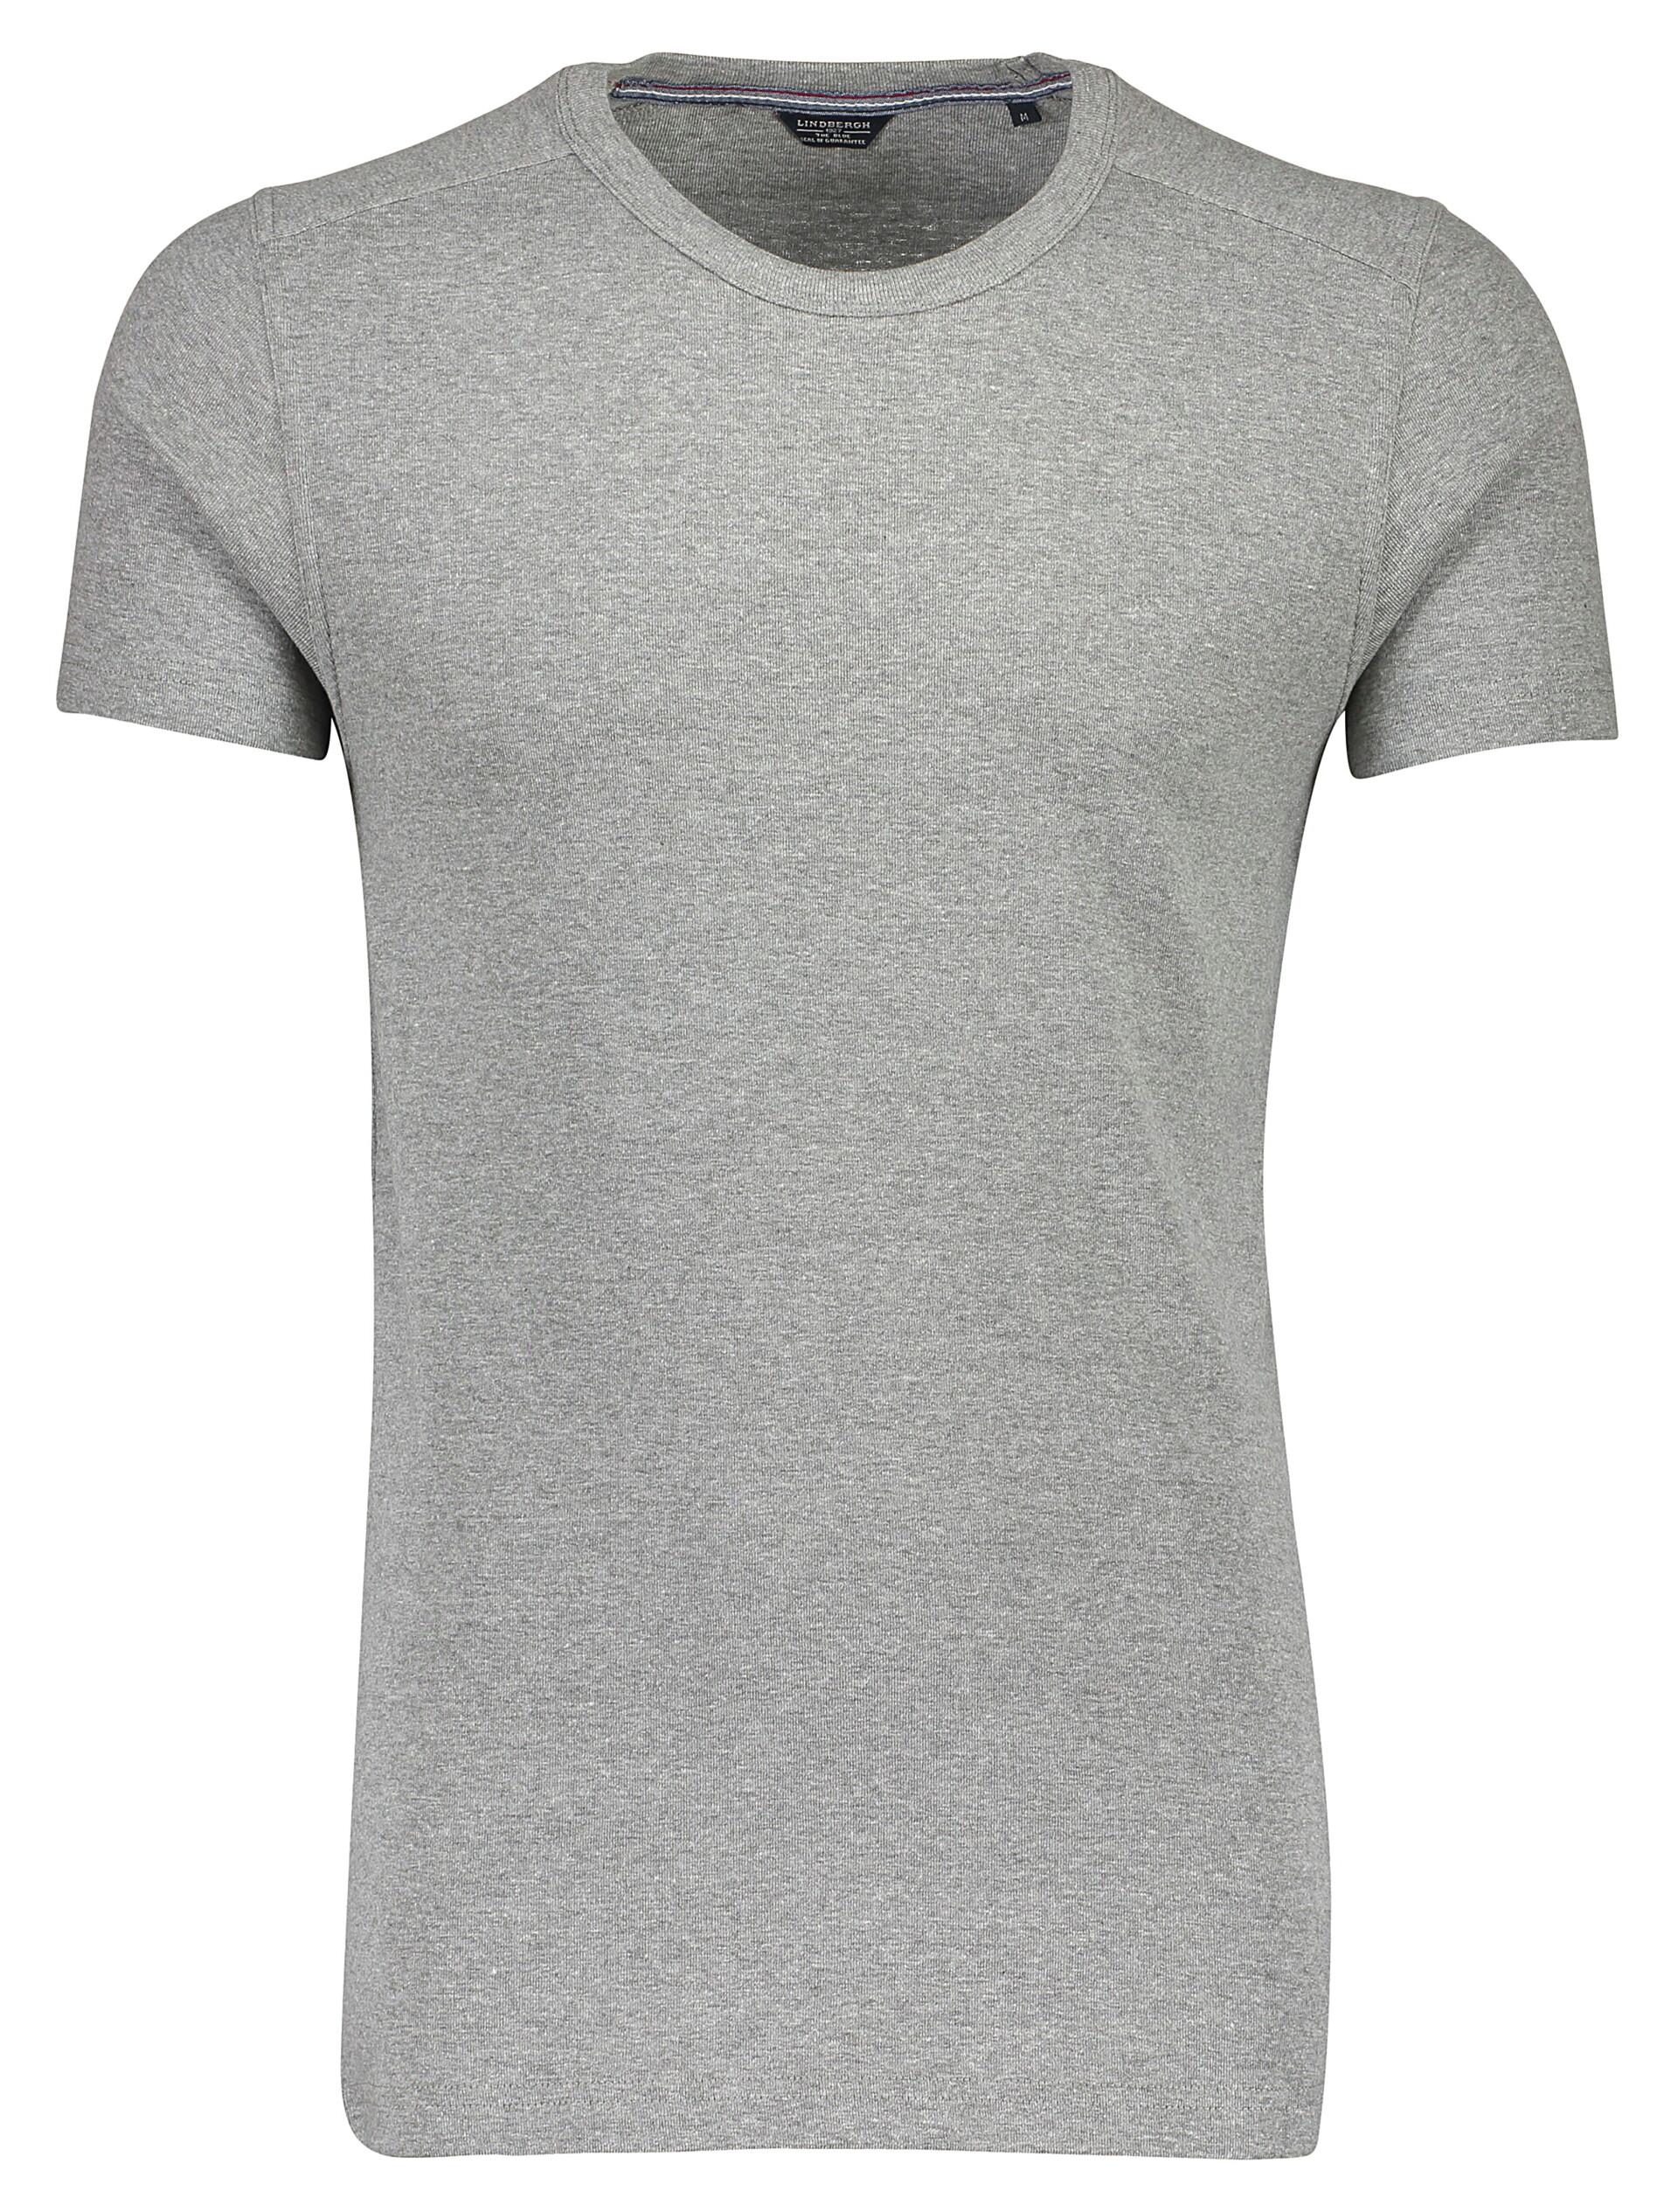 Lindbergh T-shirt grå / grey mel.